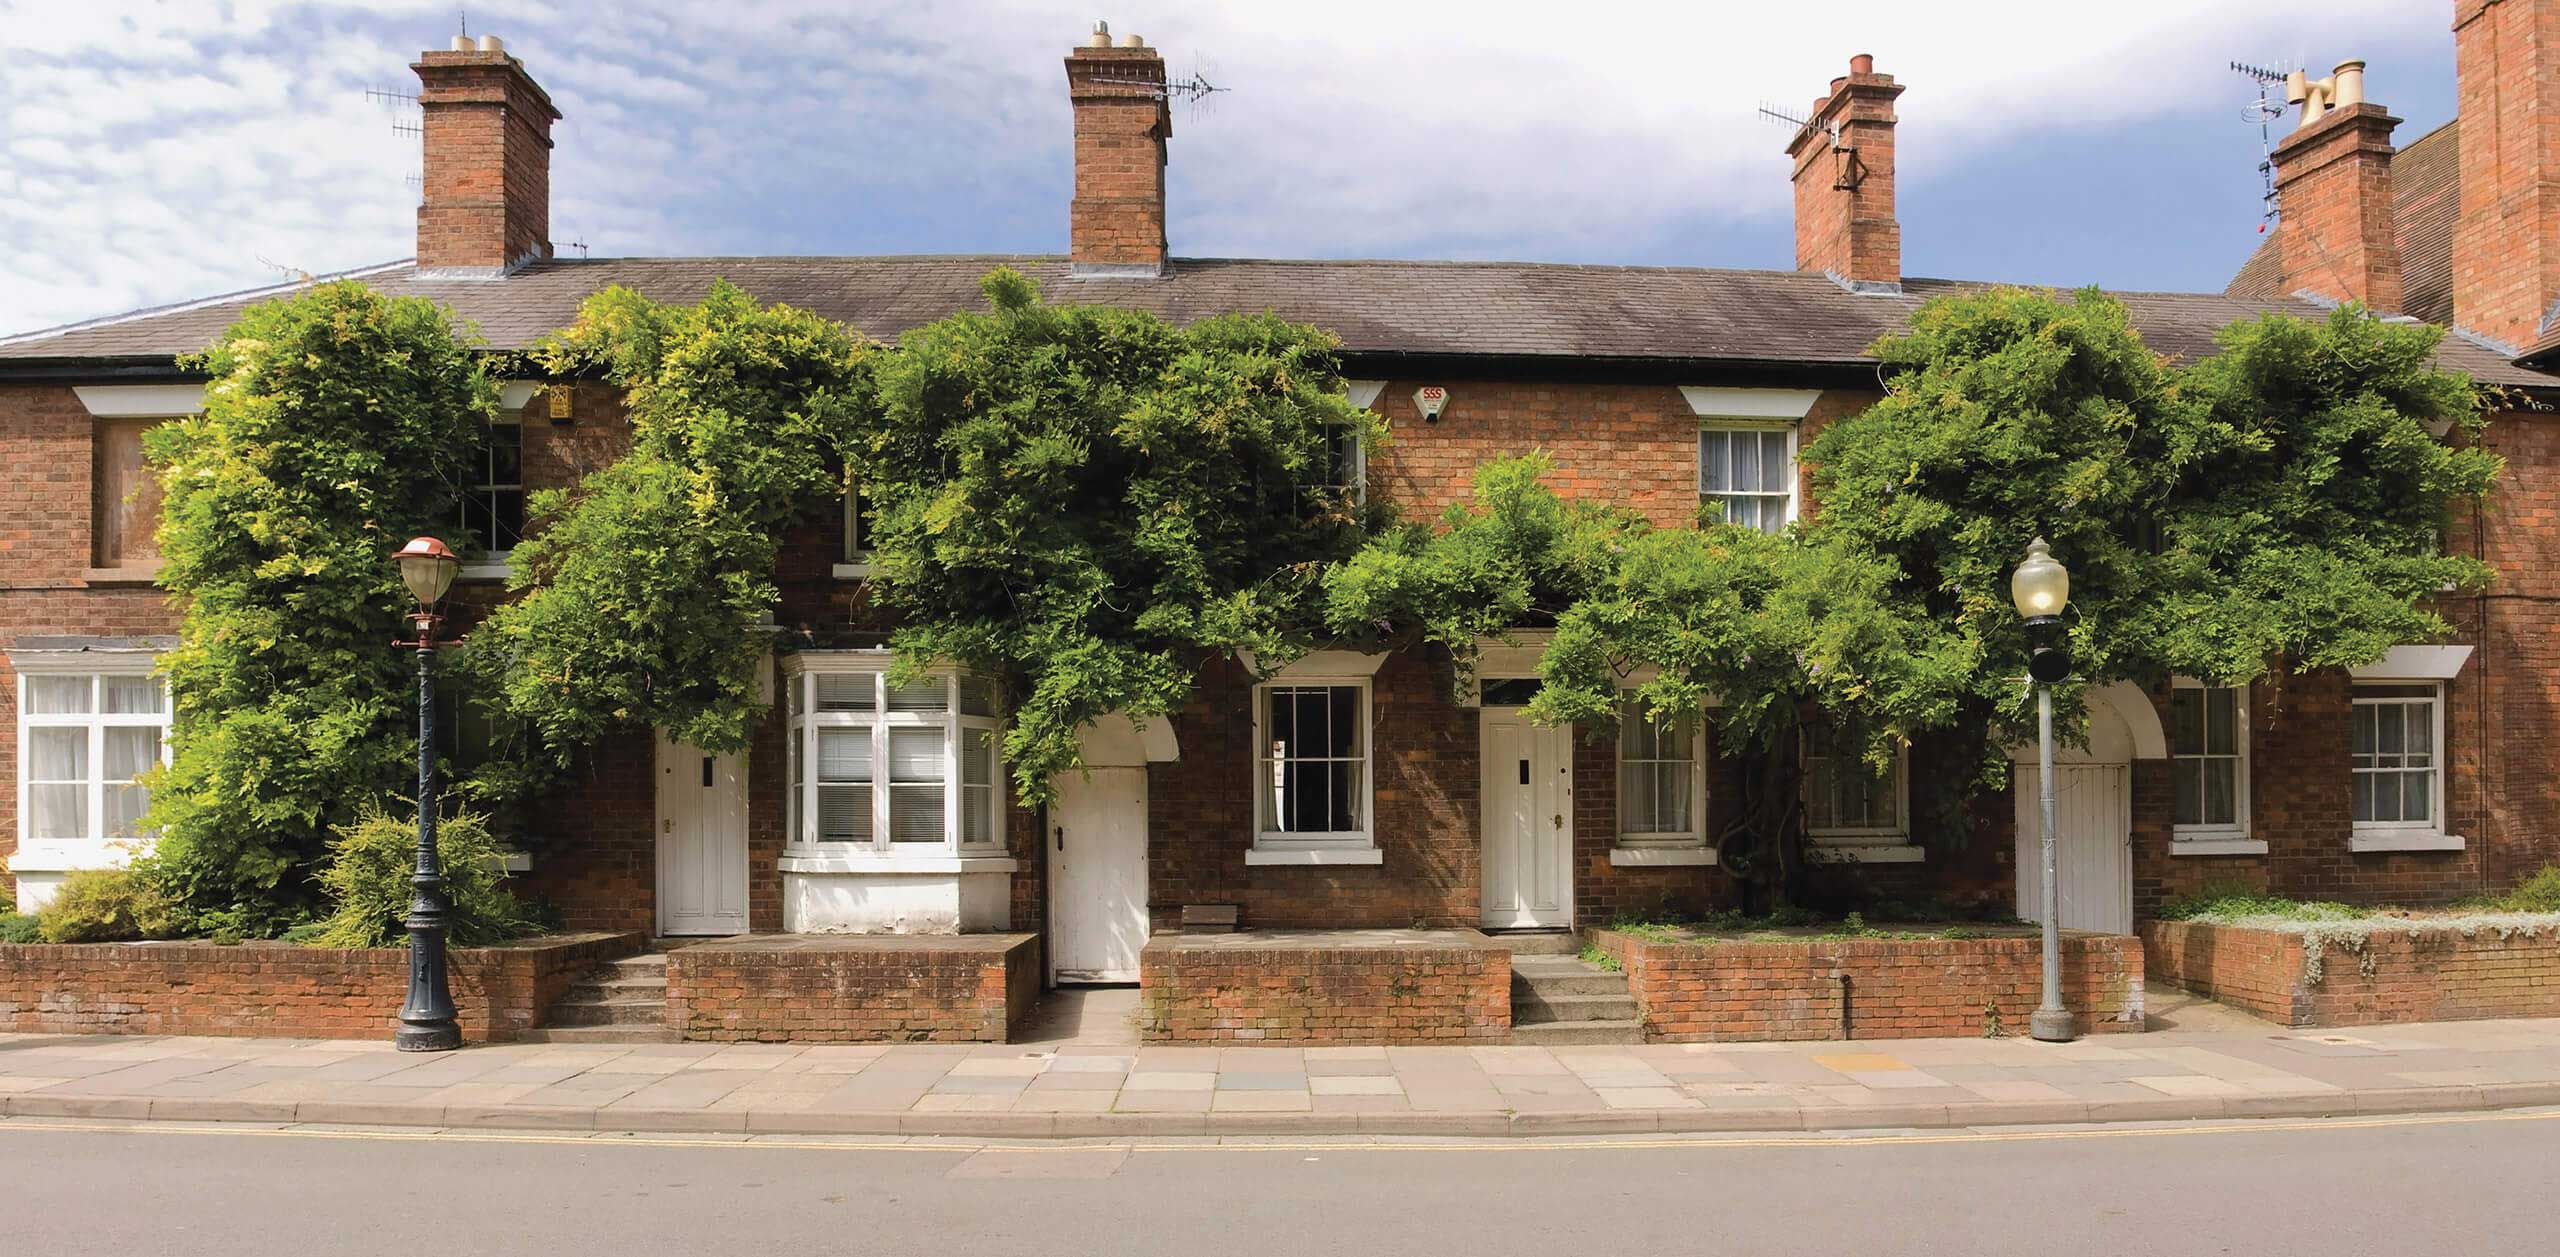 Period properties in Stratford-upon-Avon